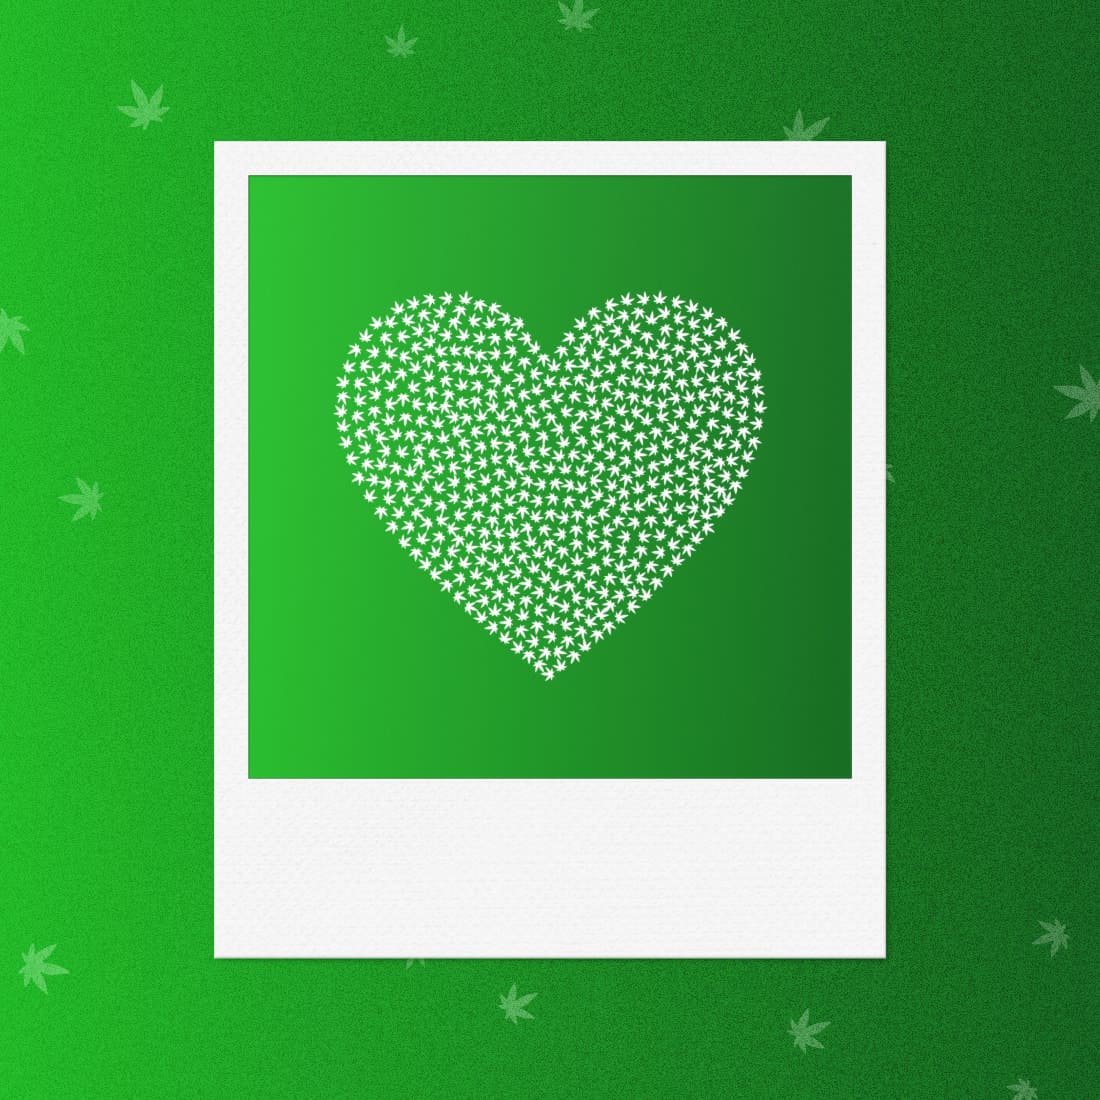 Marijuana Cannabis Heart - White Photo Frame with Green Background.